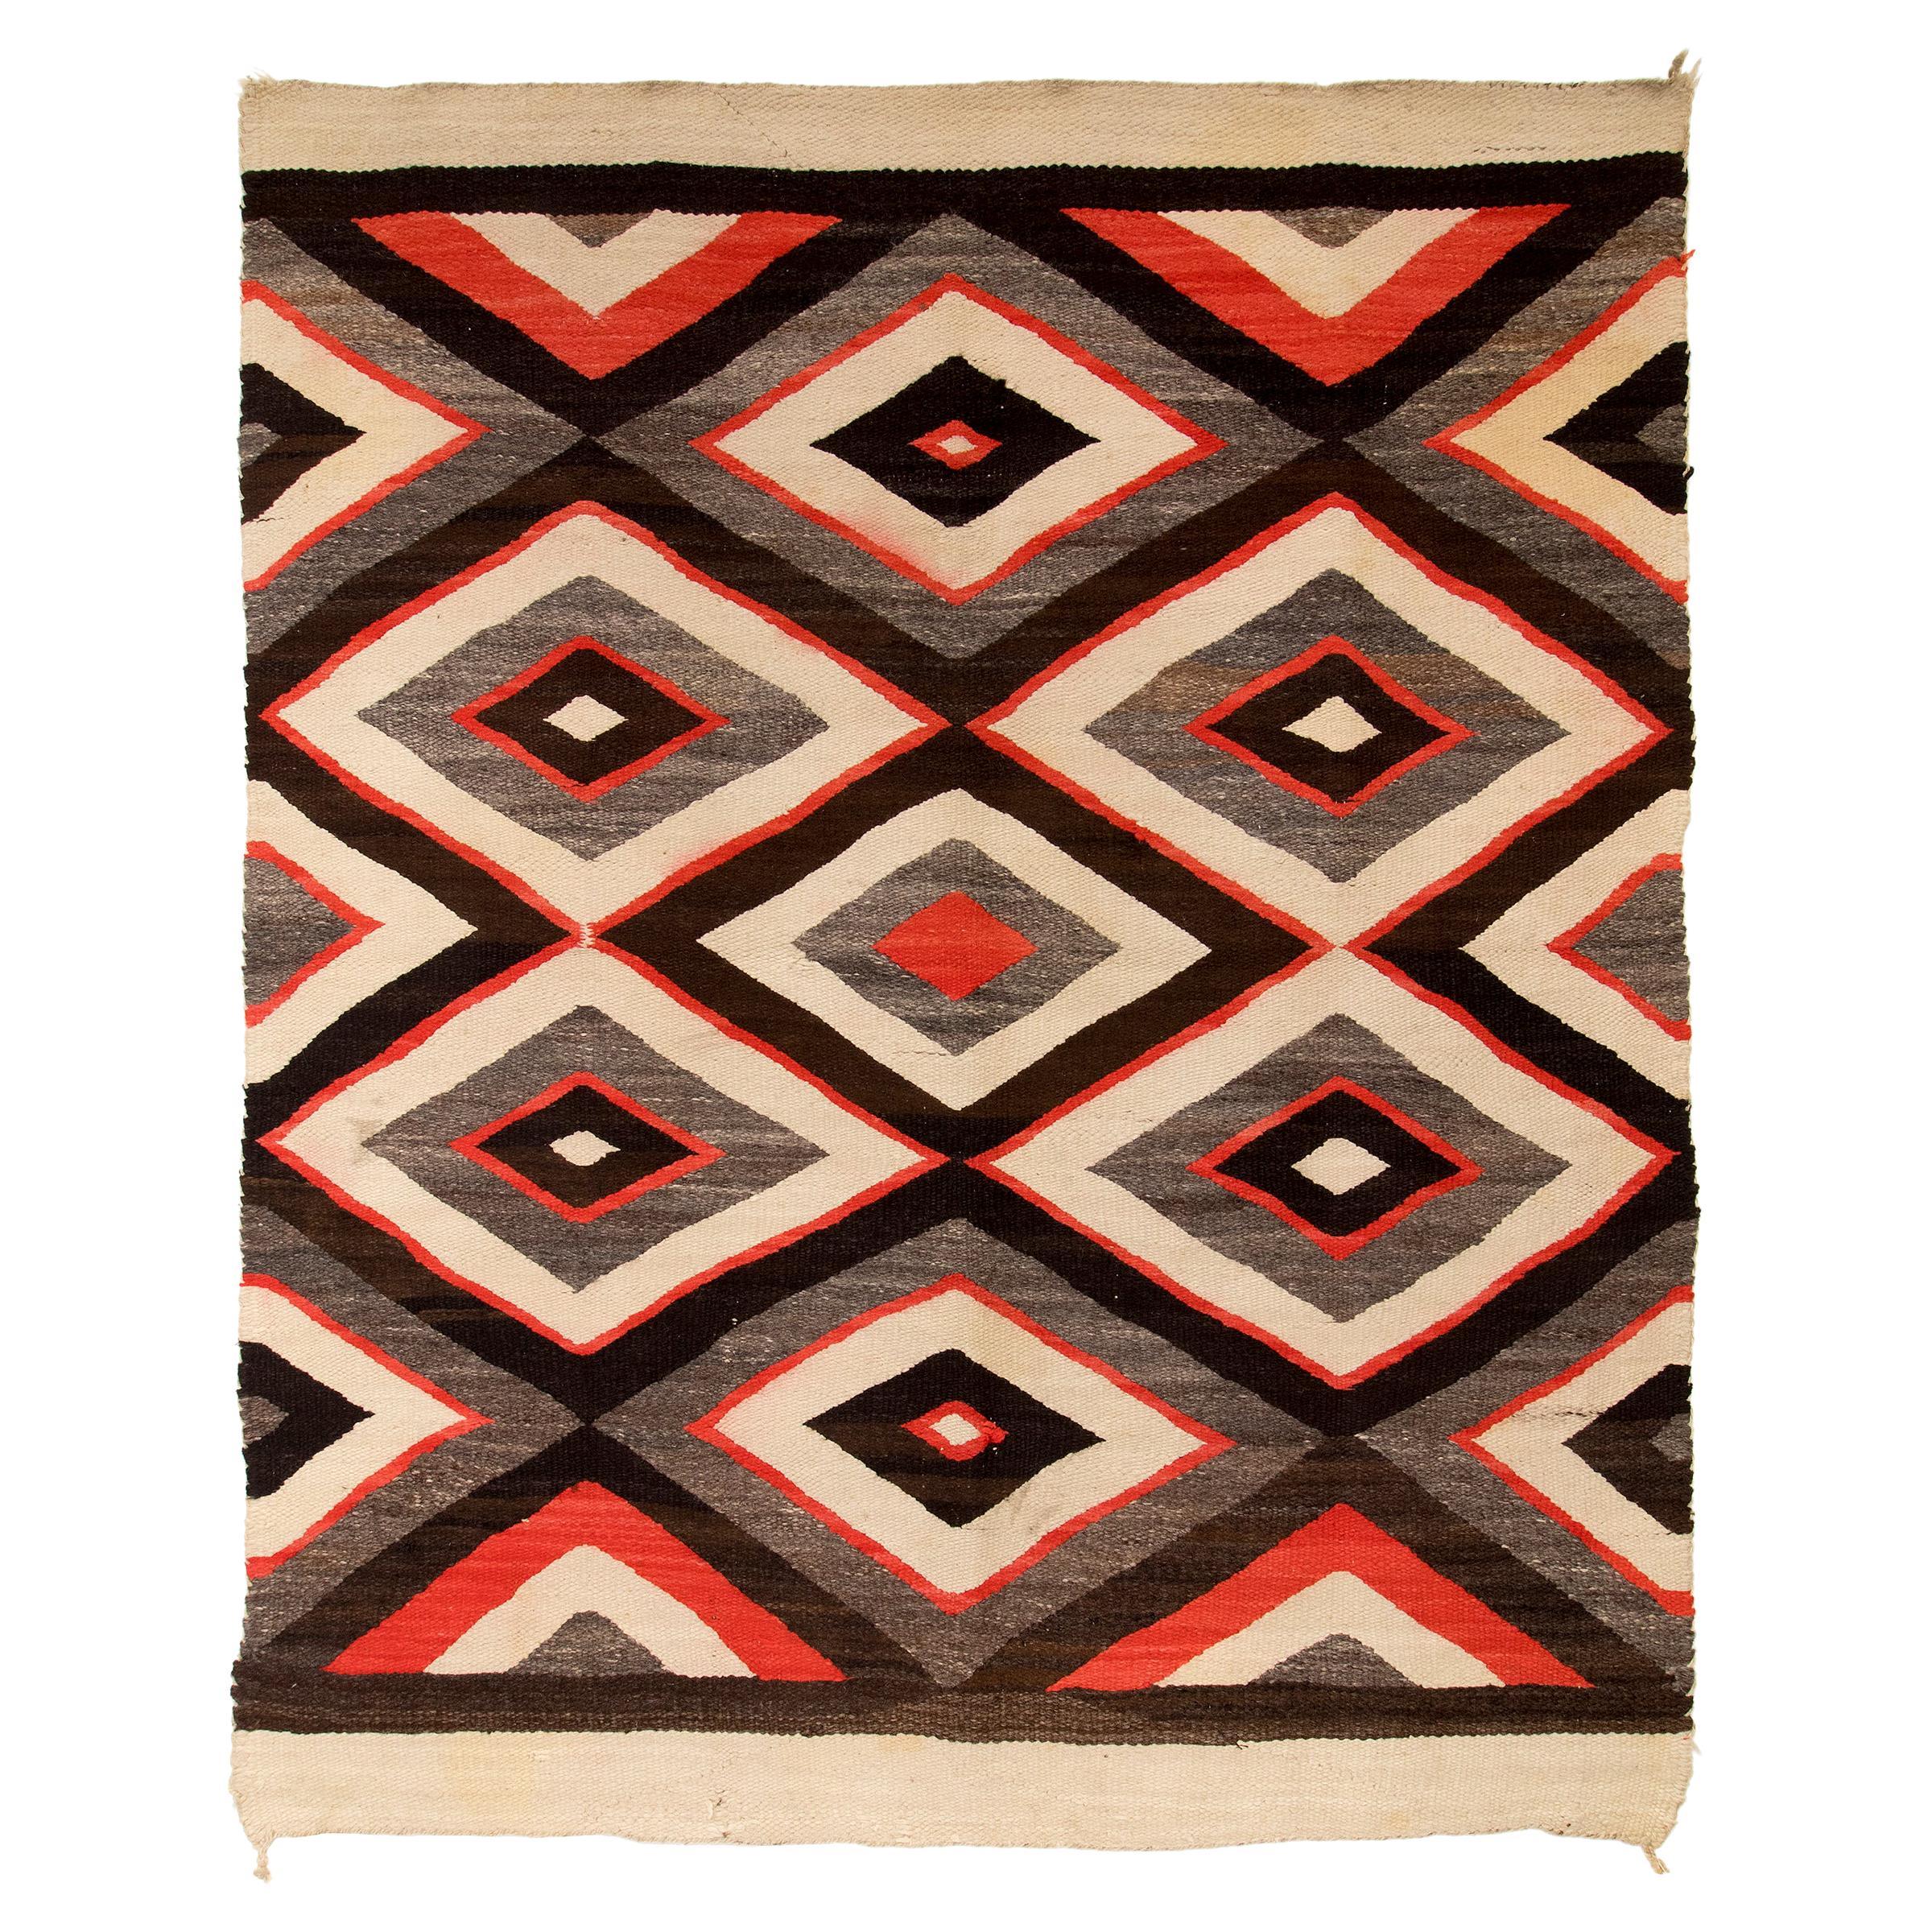 Vintage Navajo Rug, Trading Post Era Southwestern Weaving, Red Brown Black White